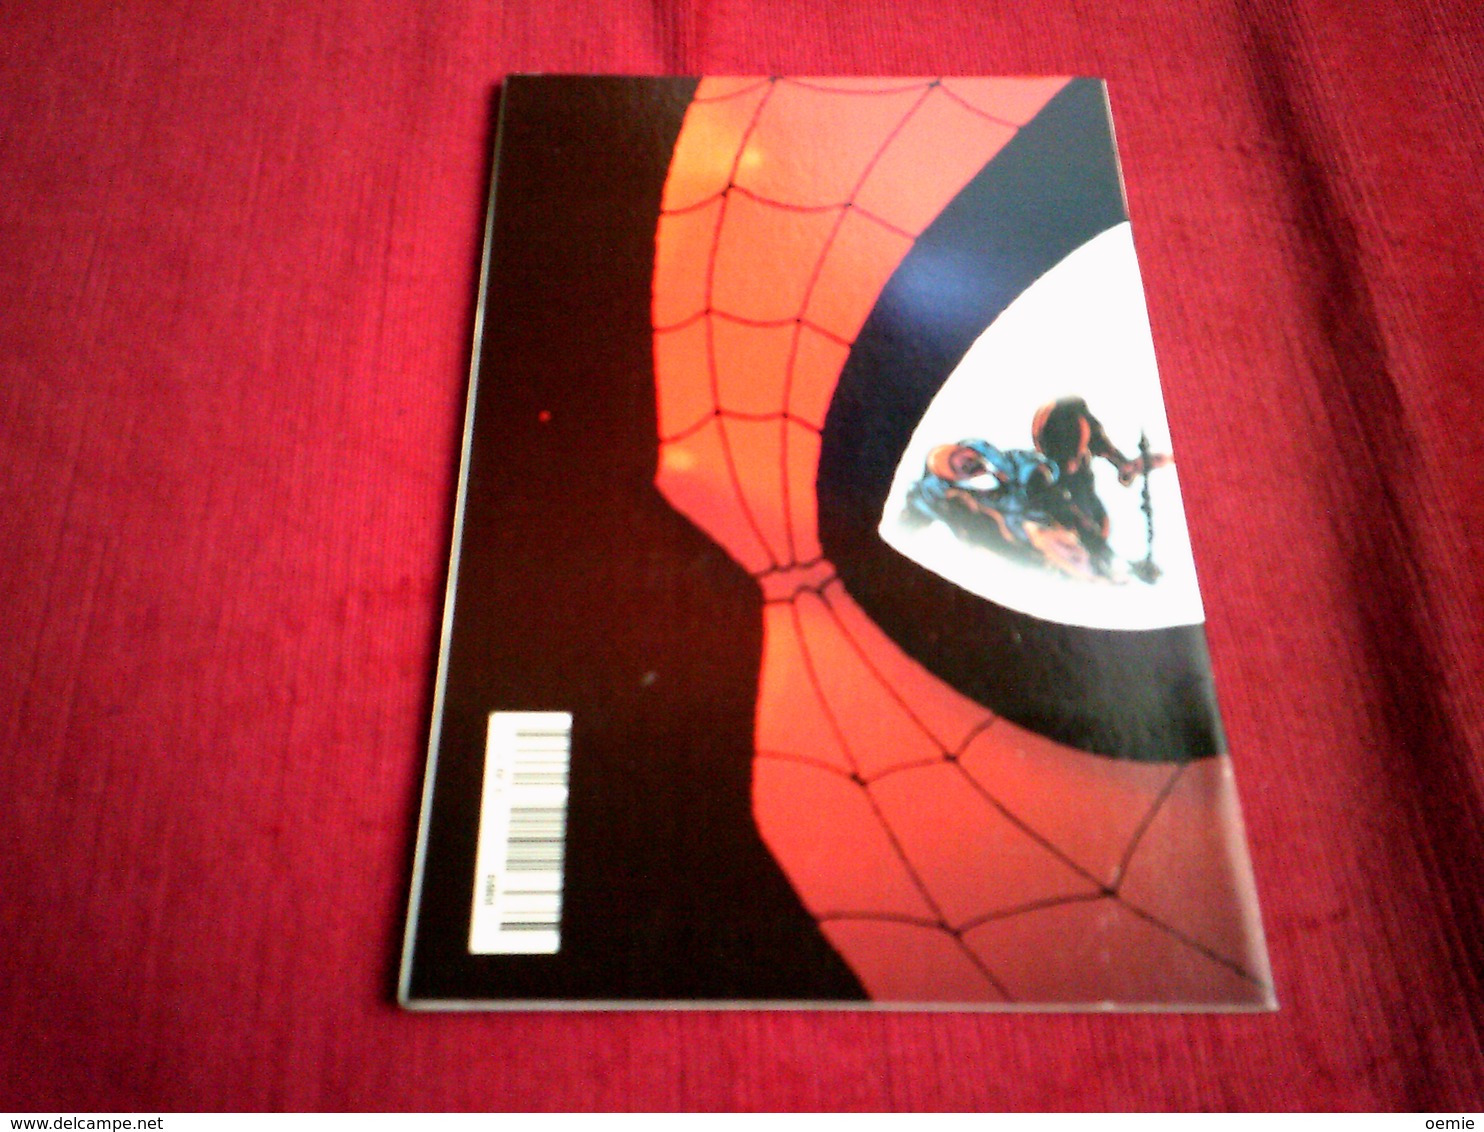 SPIDER MAN    N° 2  HORS SERIE   LE JOURNAL DU CLONE  JUIN 1996 - Spiderman